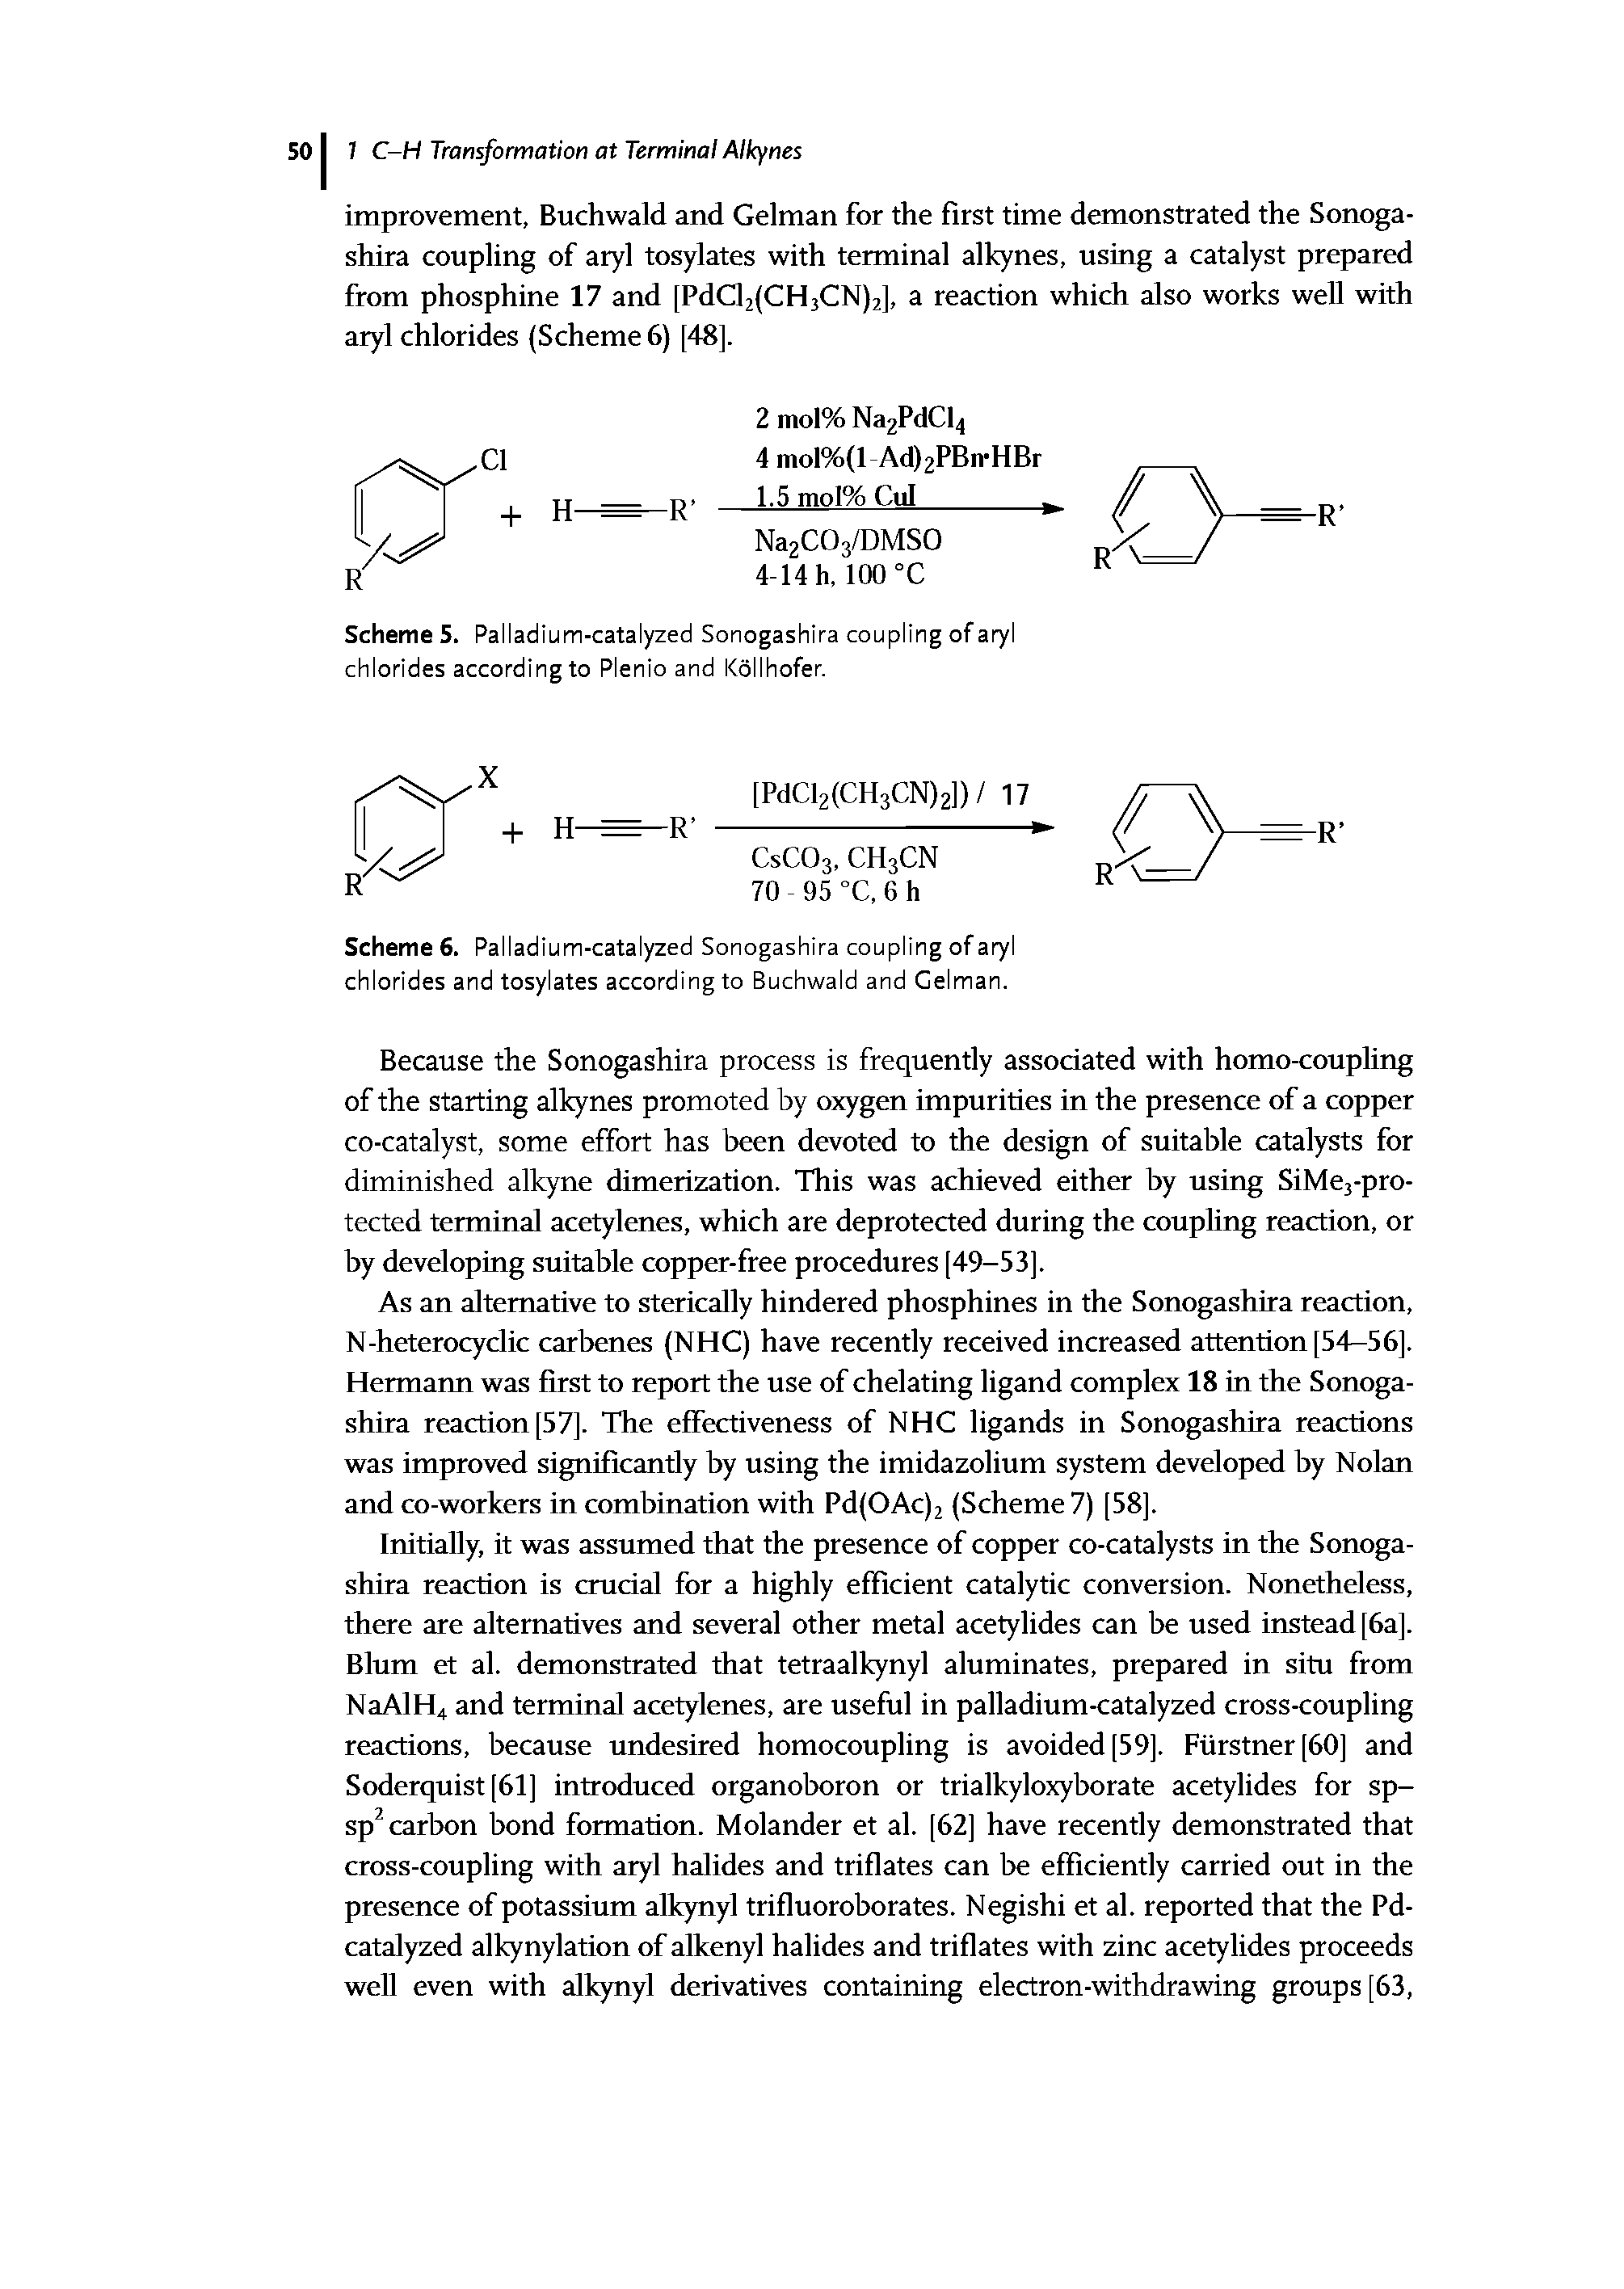 Scheme 5. Palladium-catalyzed Sonogashira coupling of aryl chlorides according to Plenio and Kollhofer.